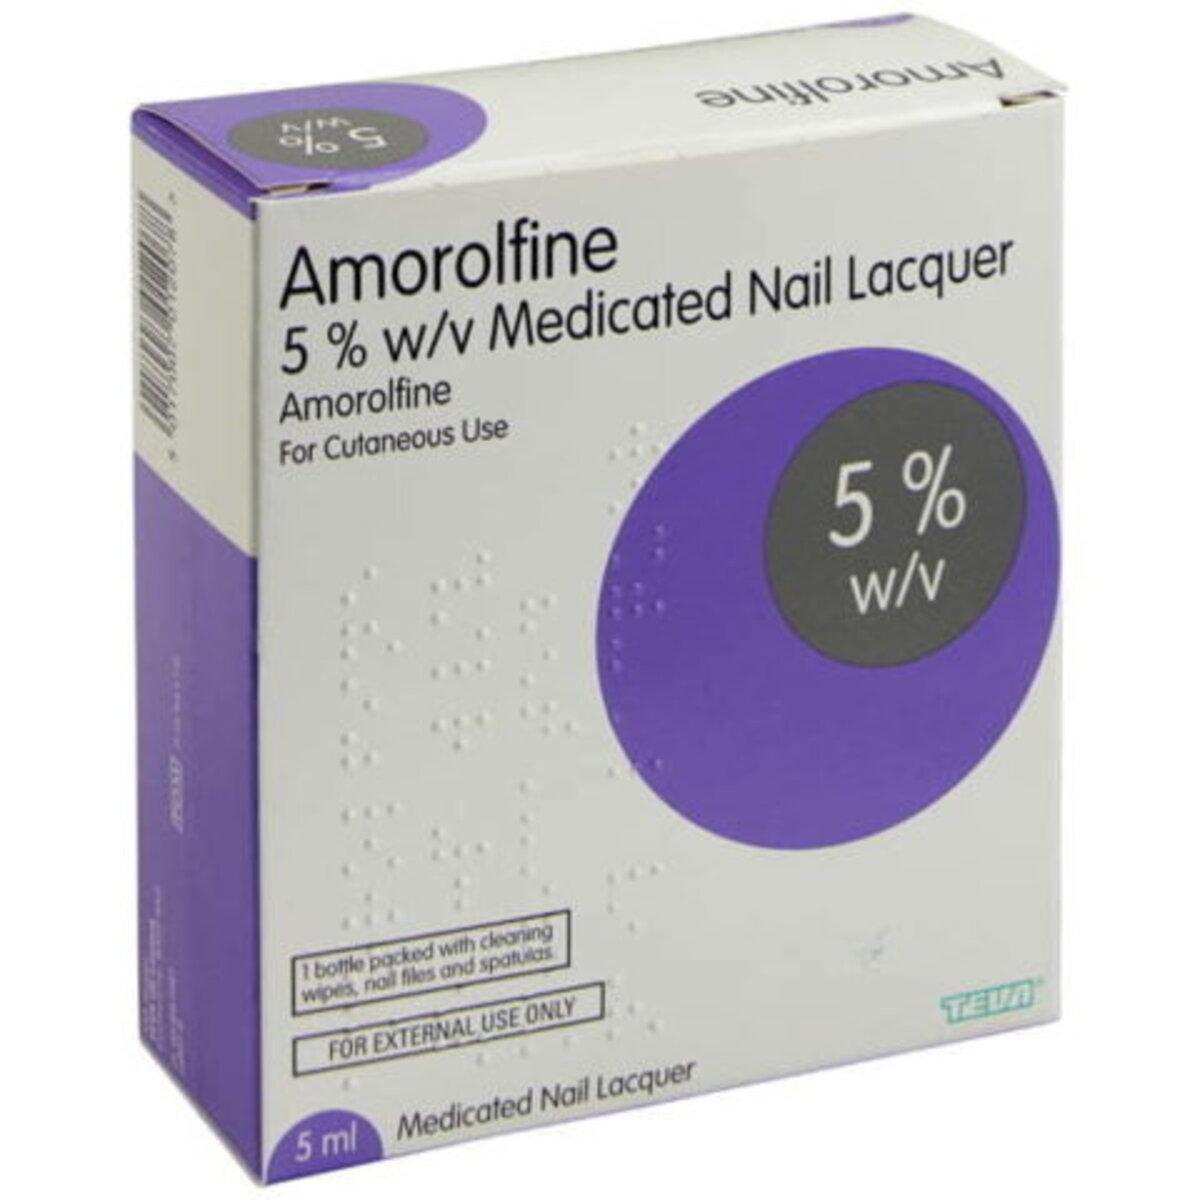 Loceryl nail lascquer 2.5ml; | Buy Loceryl nail lascquer 2.5ml From  TNMEDS.com | Buy Loceryl nail lascquer 2.5ml from tnmeds.com, View Uses  about Loceryl nail lascquer 2.5ml , Reviews on Loceryl nail